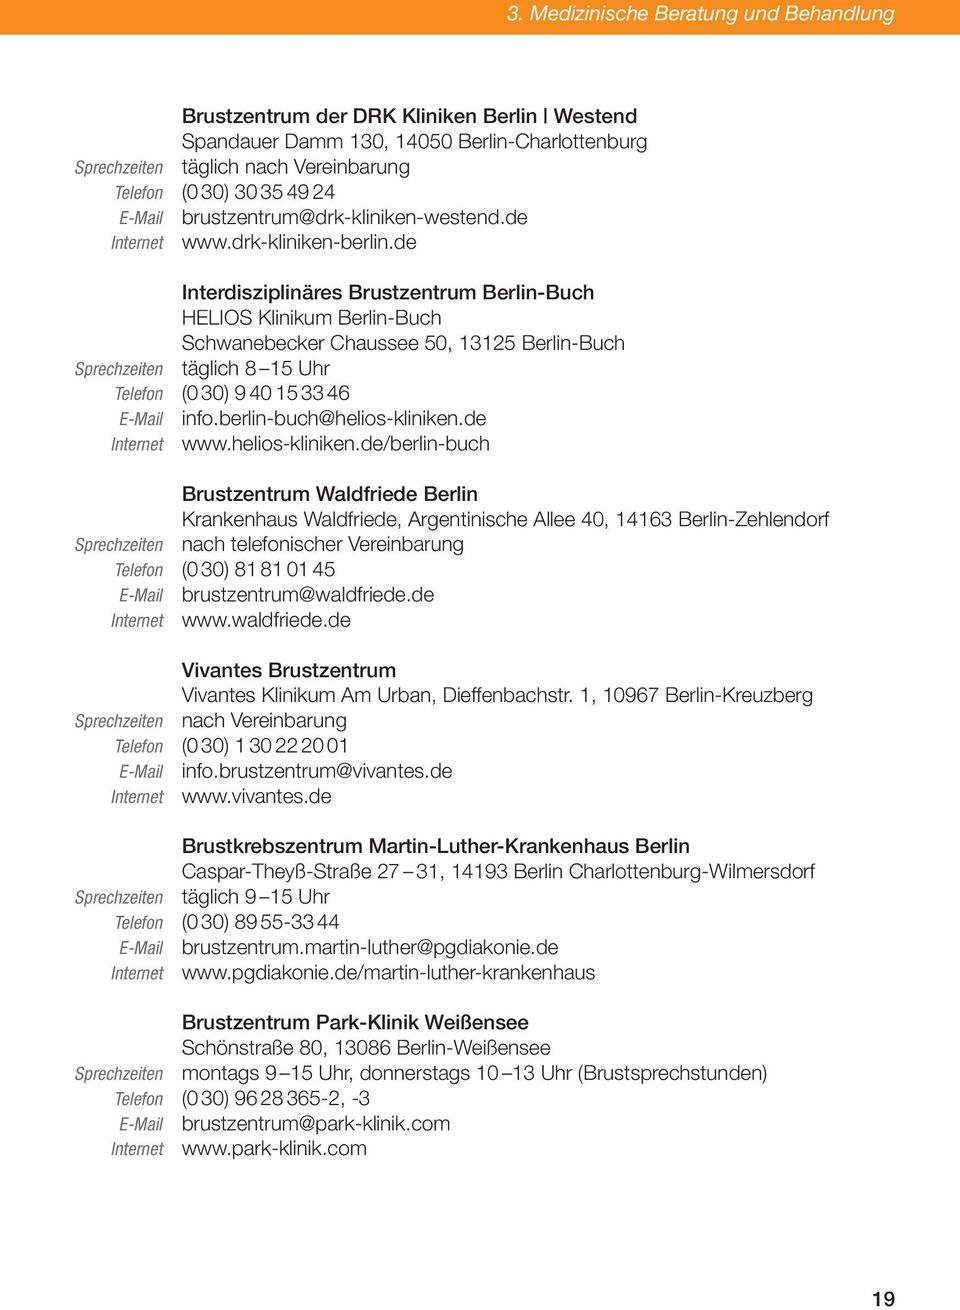 de Interdisziplinäres Brustzentrum Berlin-Buch HELIOS Klinikum Berlin-Buch Schwanebecker Chaussee 50, 13125 Berlin-Buch Sprechzeiten täglich 8 15 Uhr Telefon (0 30) 9 40 15 33 46 E-Mail info.